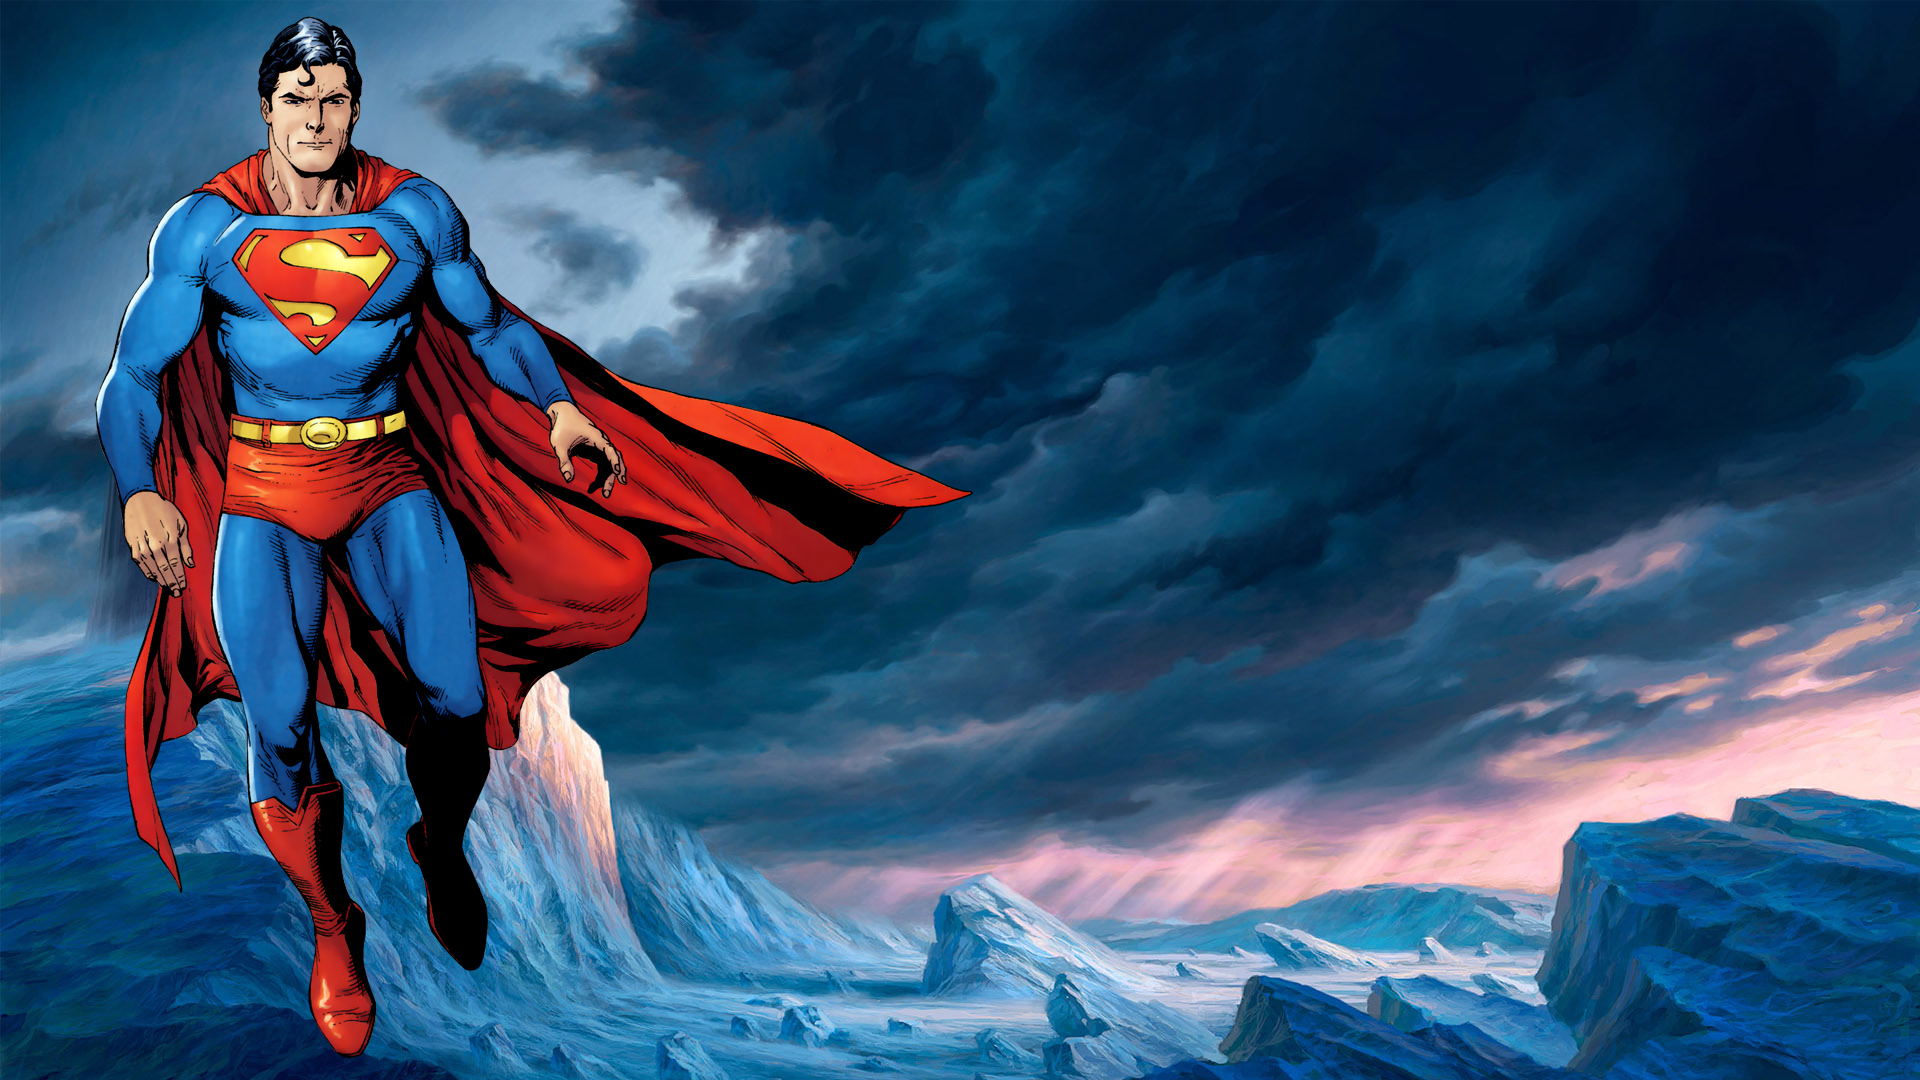 Superman Cartoon Wallpaper Image Amp Pictures Becuo